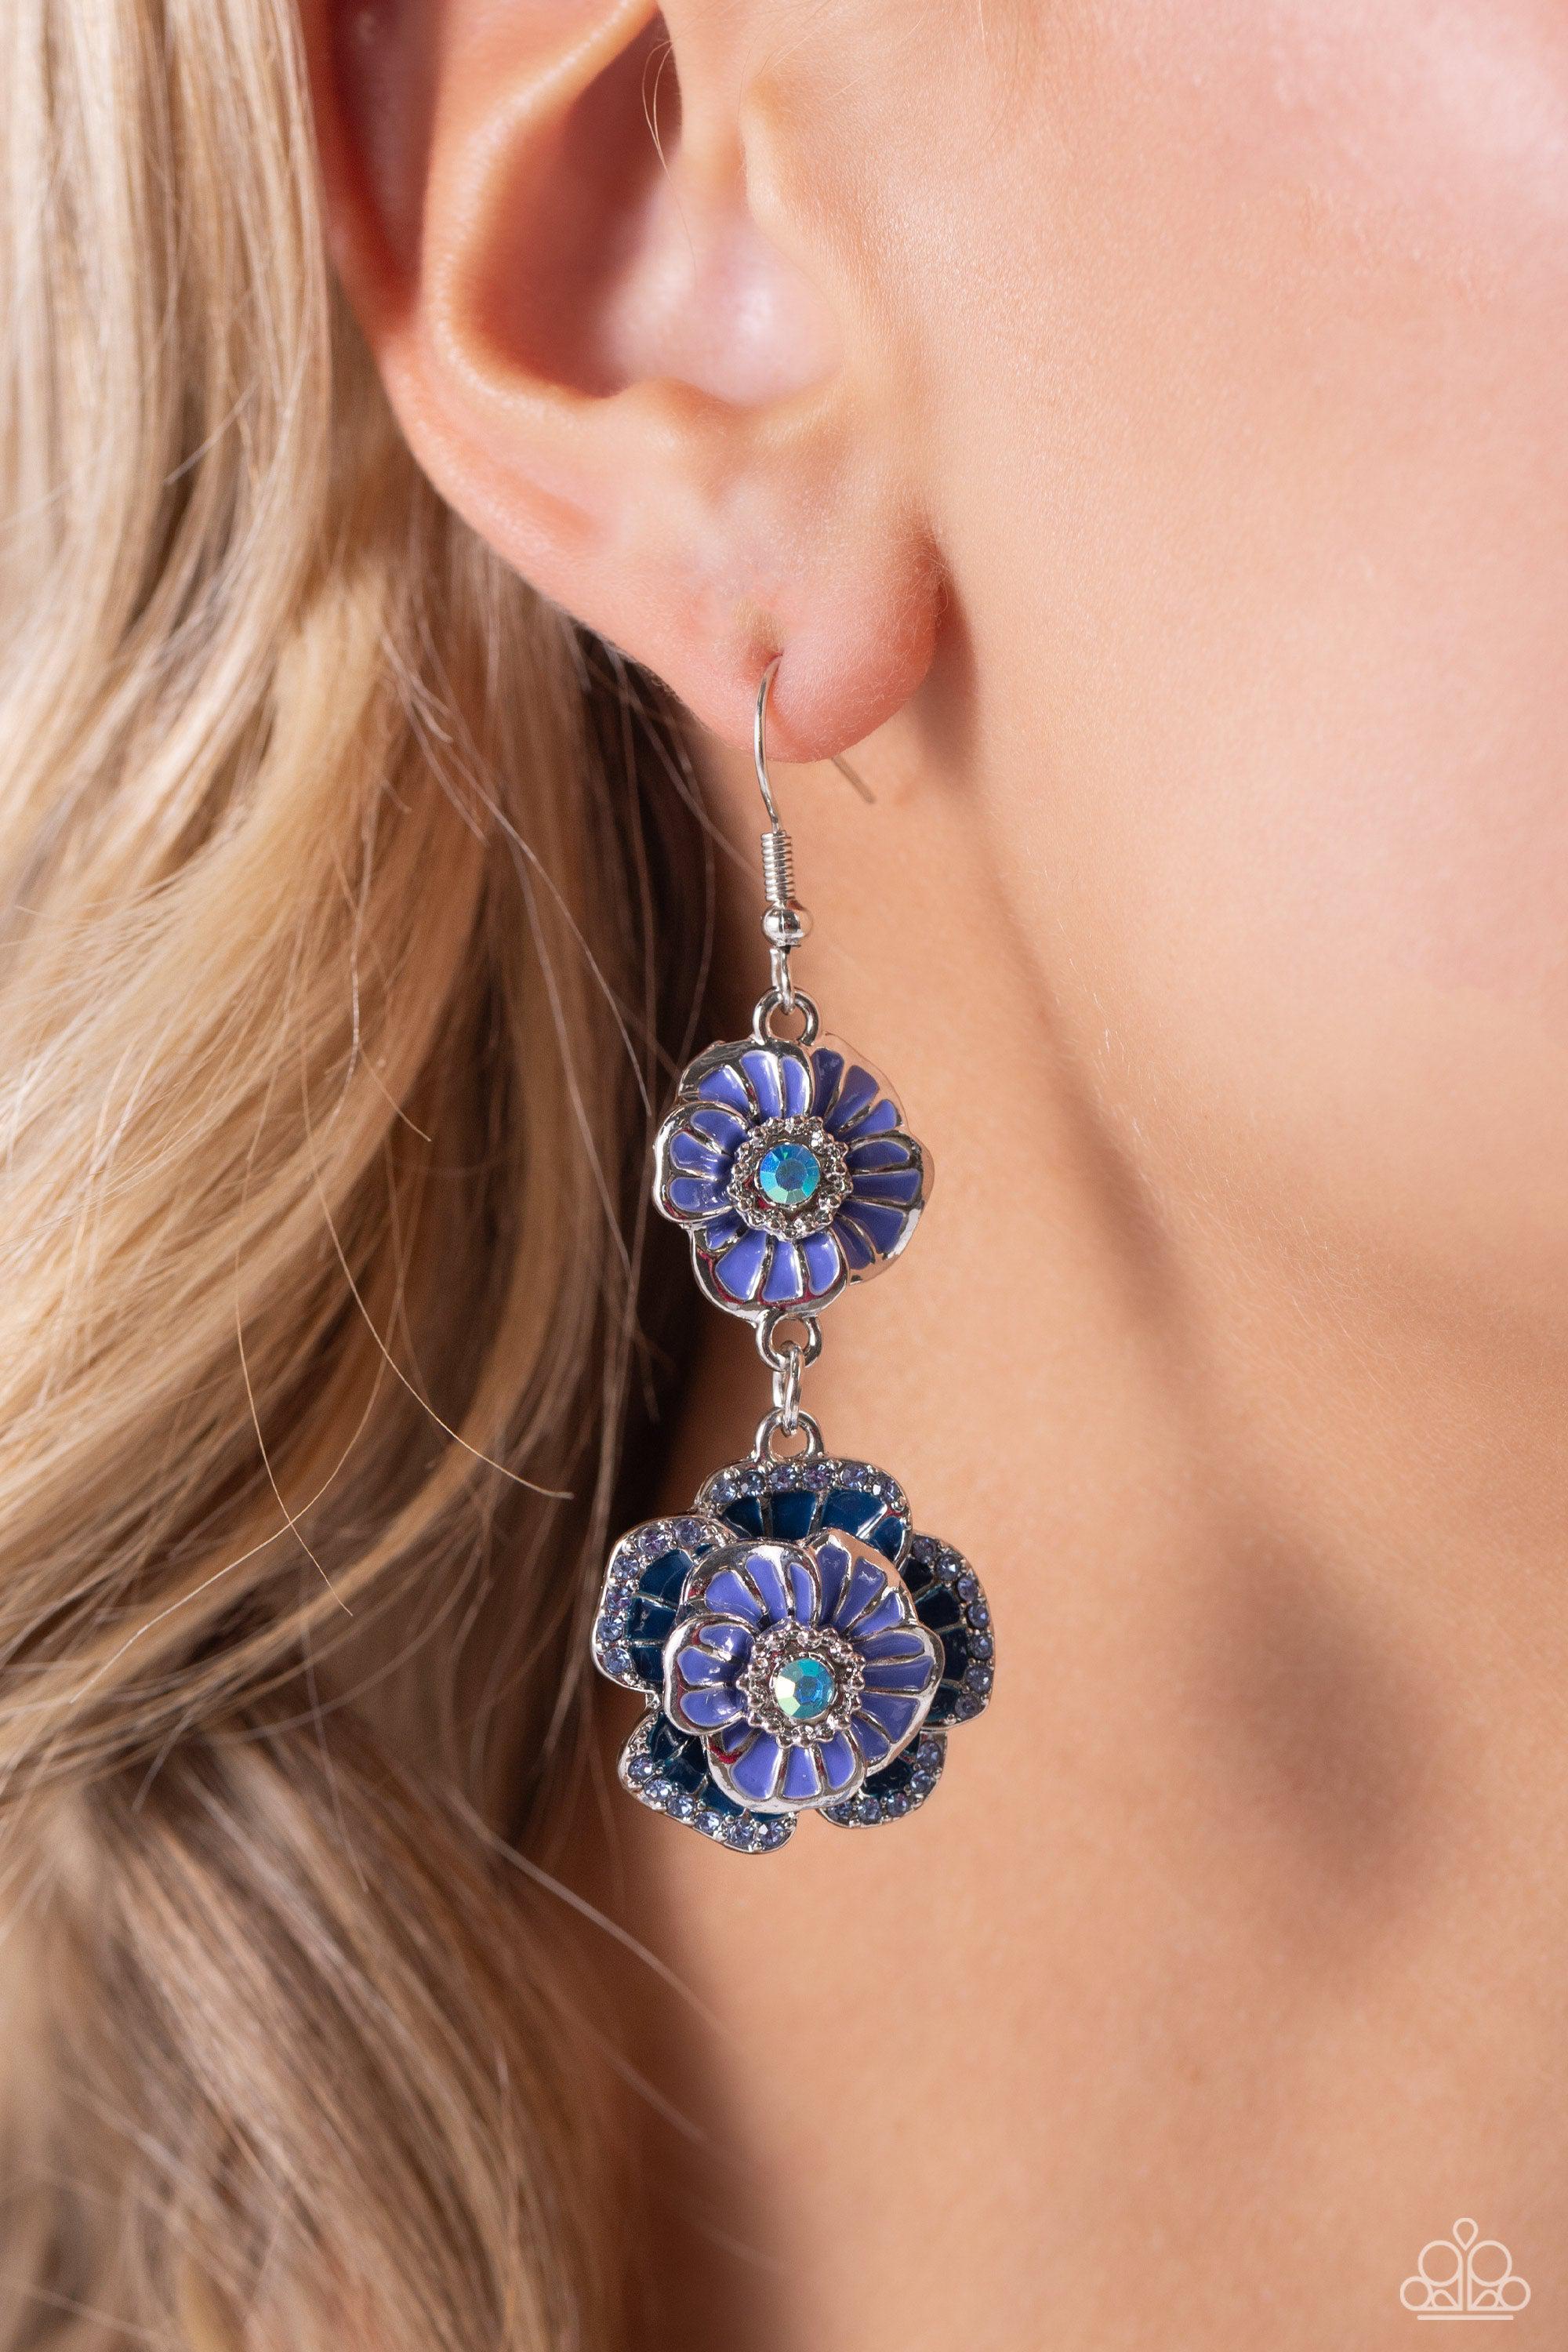 Intricate Impression Blue Rhinestone Flower Earrings - Paparazzi Accessories- lightbox - CarasShop.com - $5 Jewelry by Cara Jewels